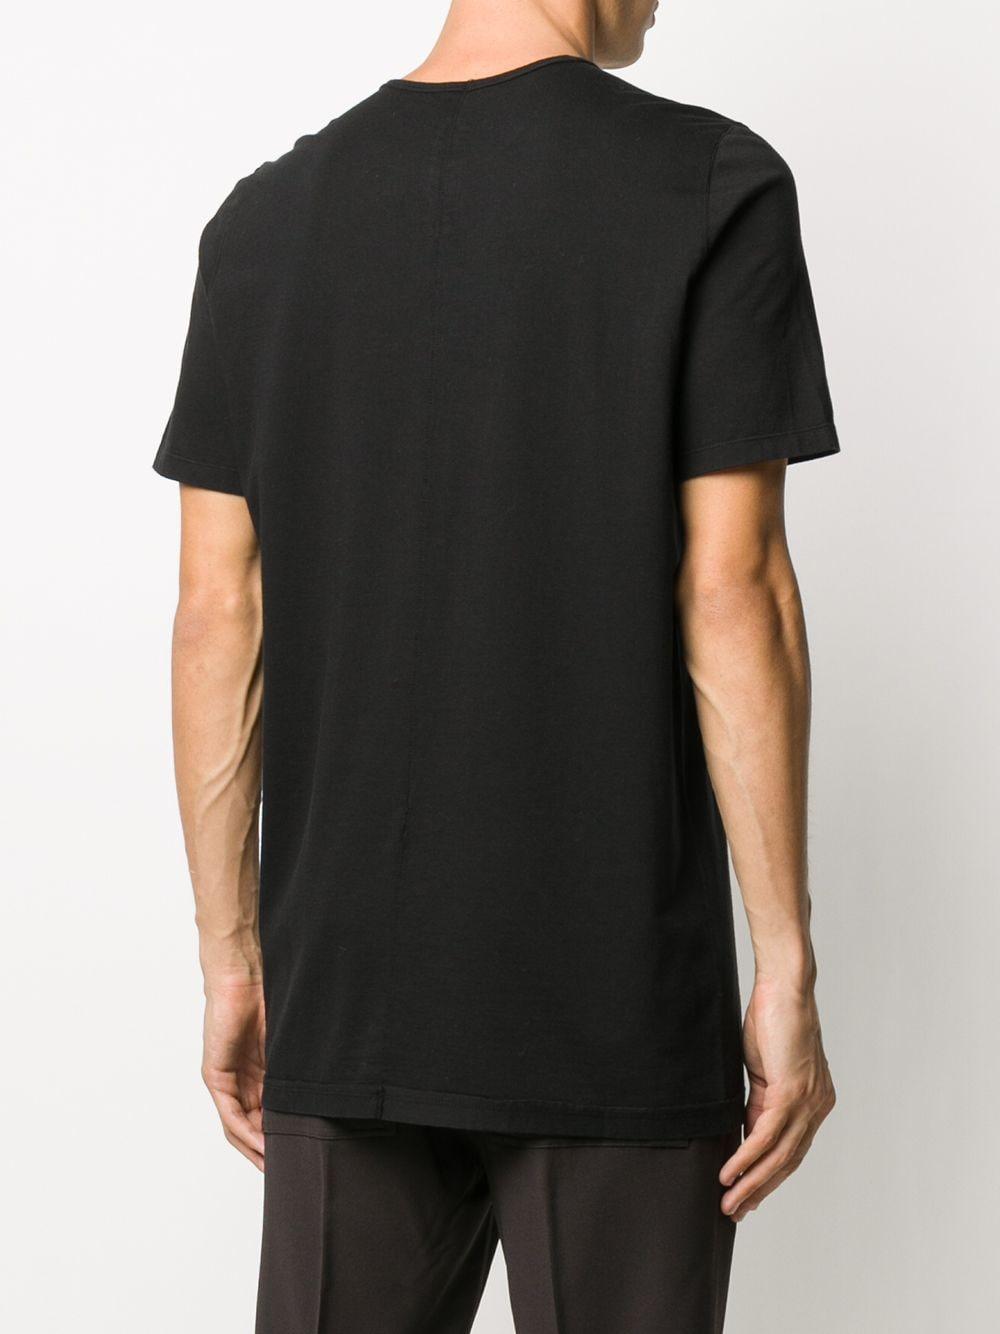 Rick Owens Drkshdw Cotton Graphic-print T-shirt in Black for Men - Lyst